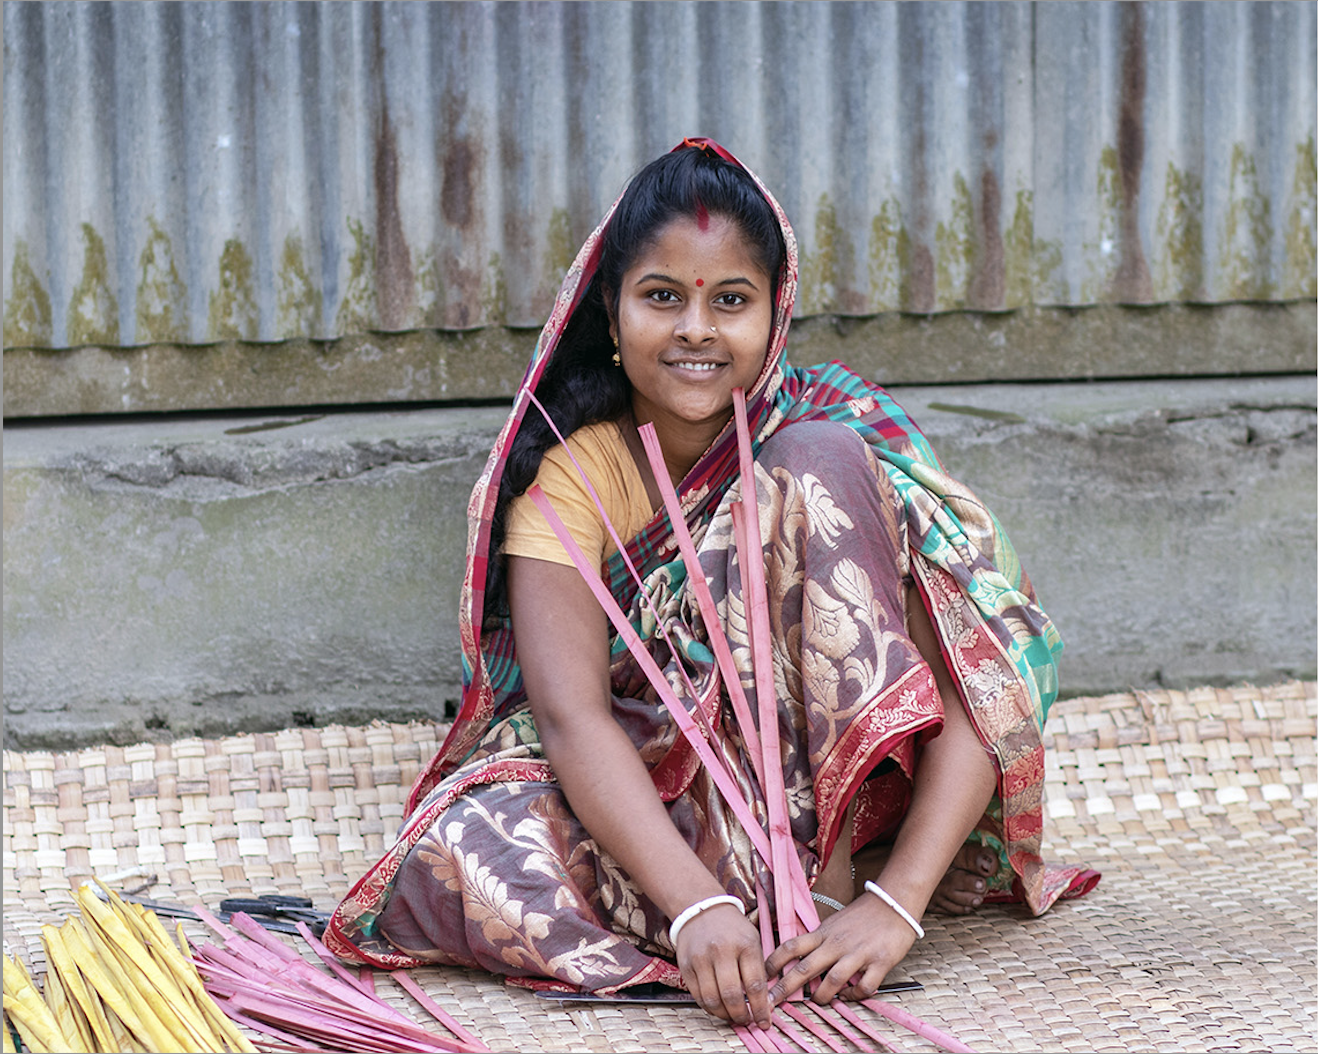 fair trade trades of hope artisan partner dipu in Bangladesh hand weaving and smiling